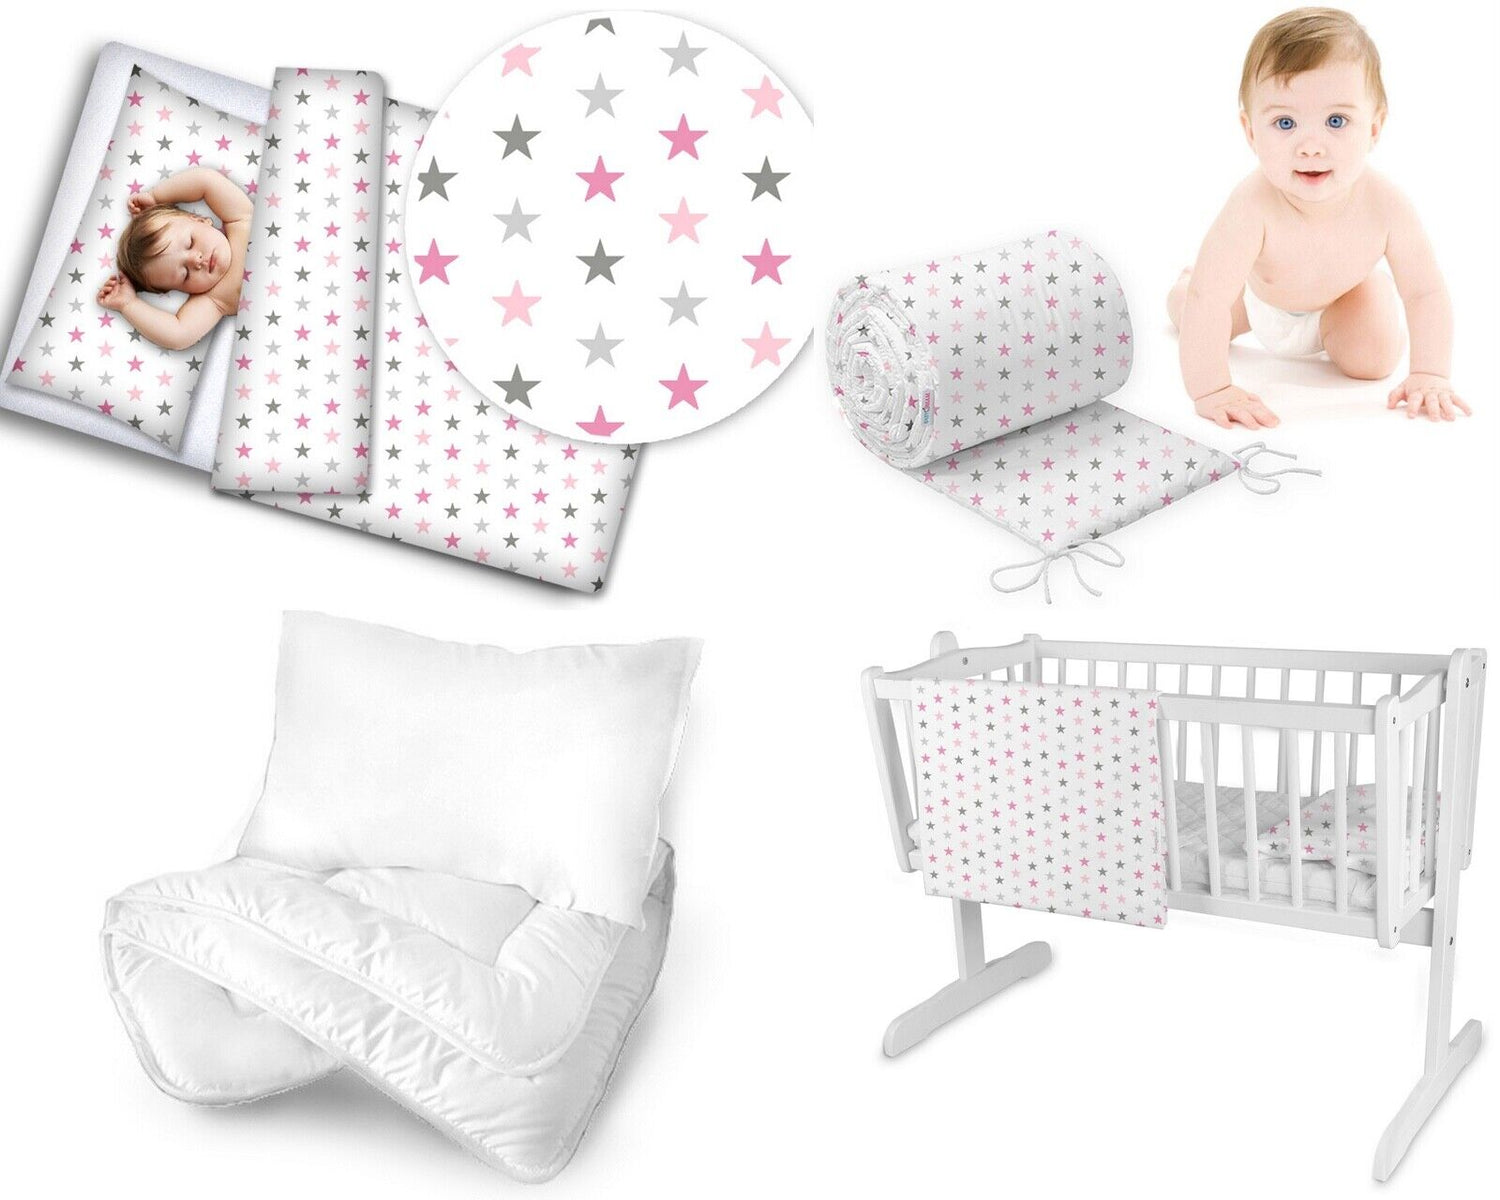 Baby bedding set 5pc nursery cotton pillow duvet bumper 70x80cm Grey Pink stars